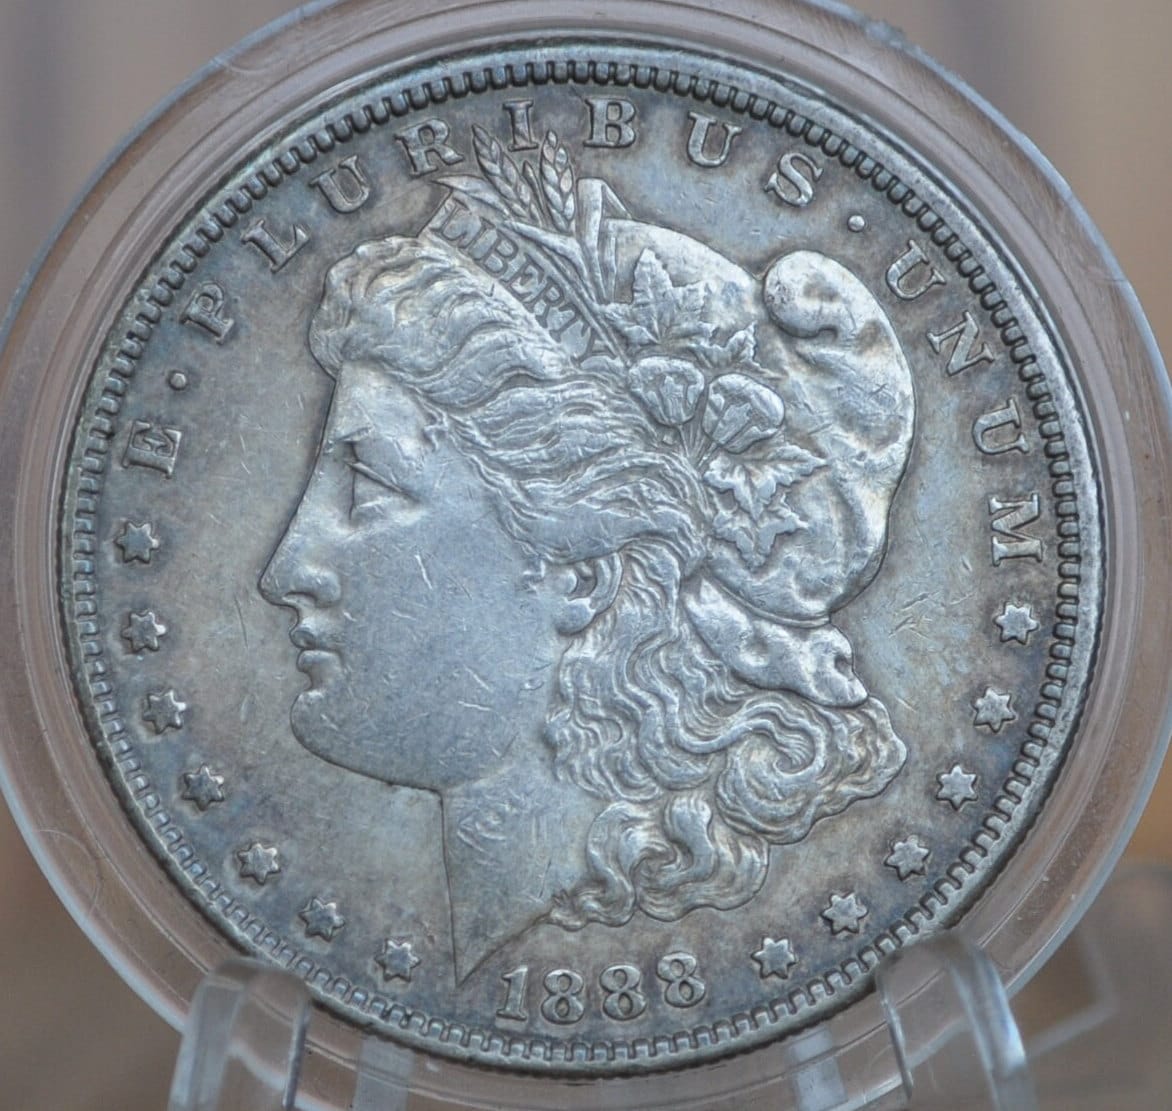 1888-S Morgan Silver Dollar - Choose by Grade / Condition - 1888 S Morgan Dollar - 1888S Silver Dollar - "S" Mint Mark - San Francisco Mint